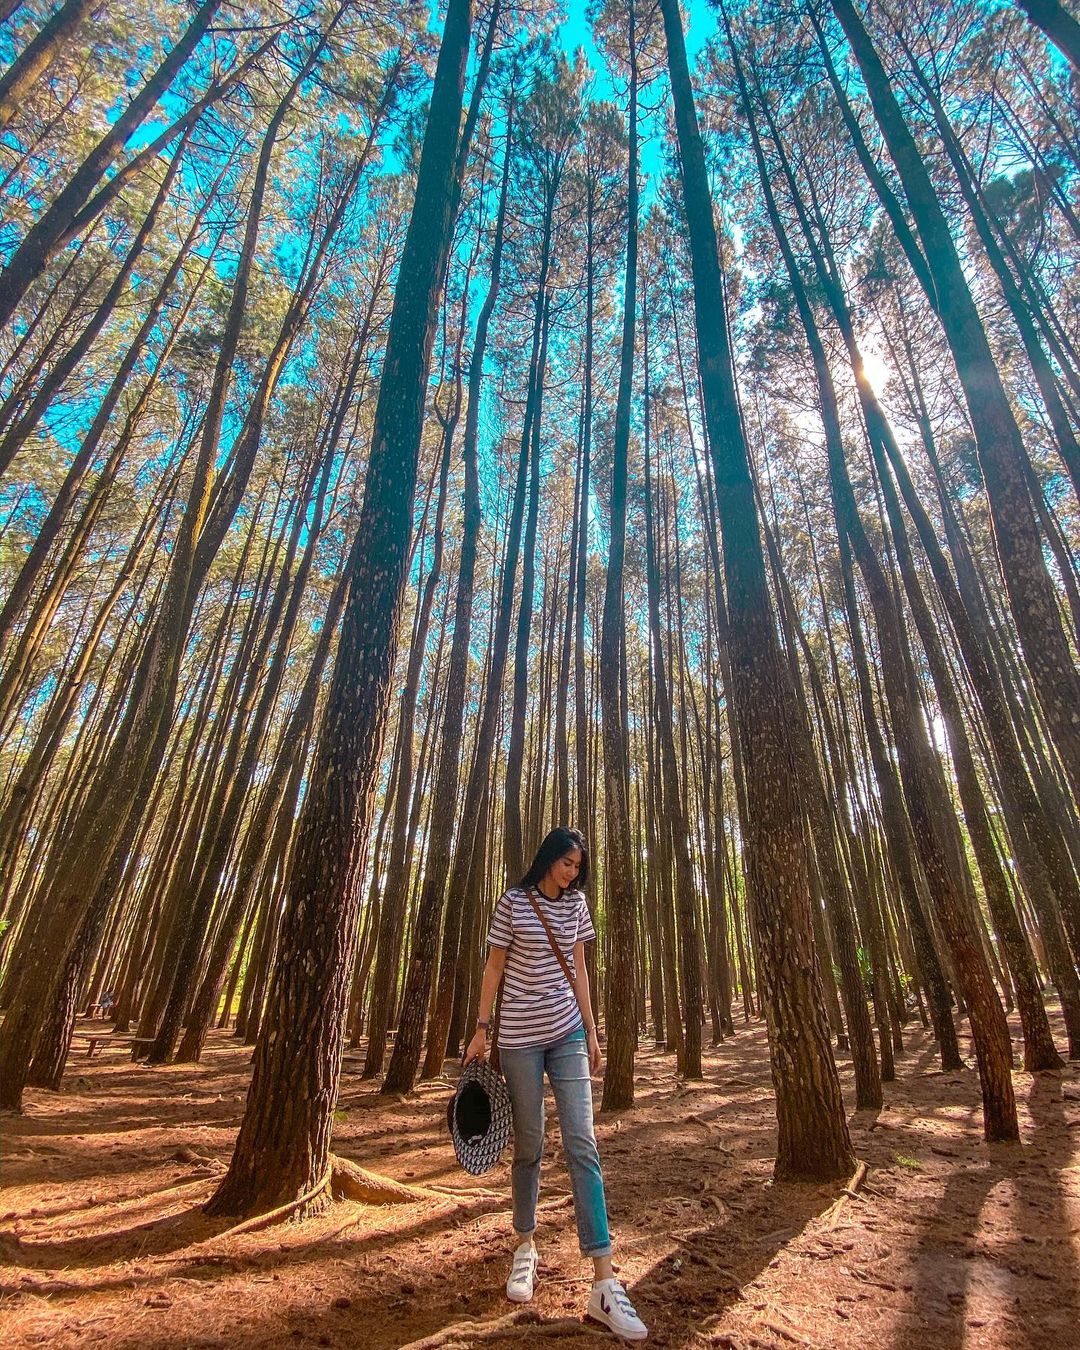 Hutan Pinus Mangunan Yogyakarta